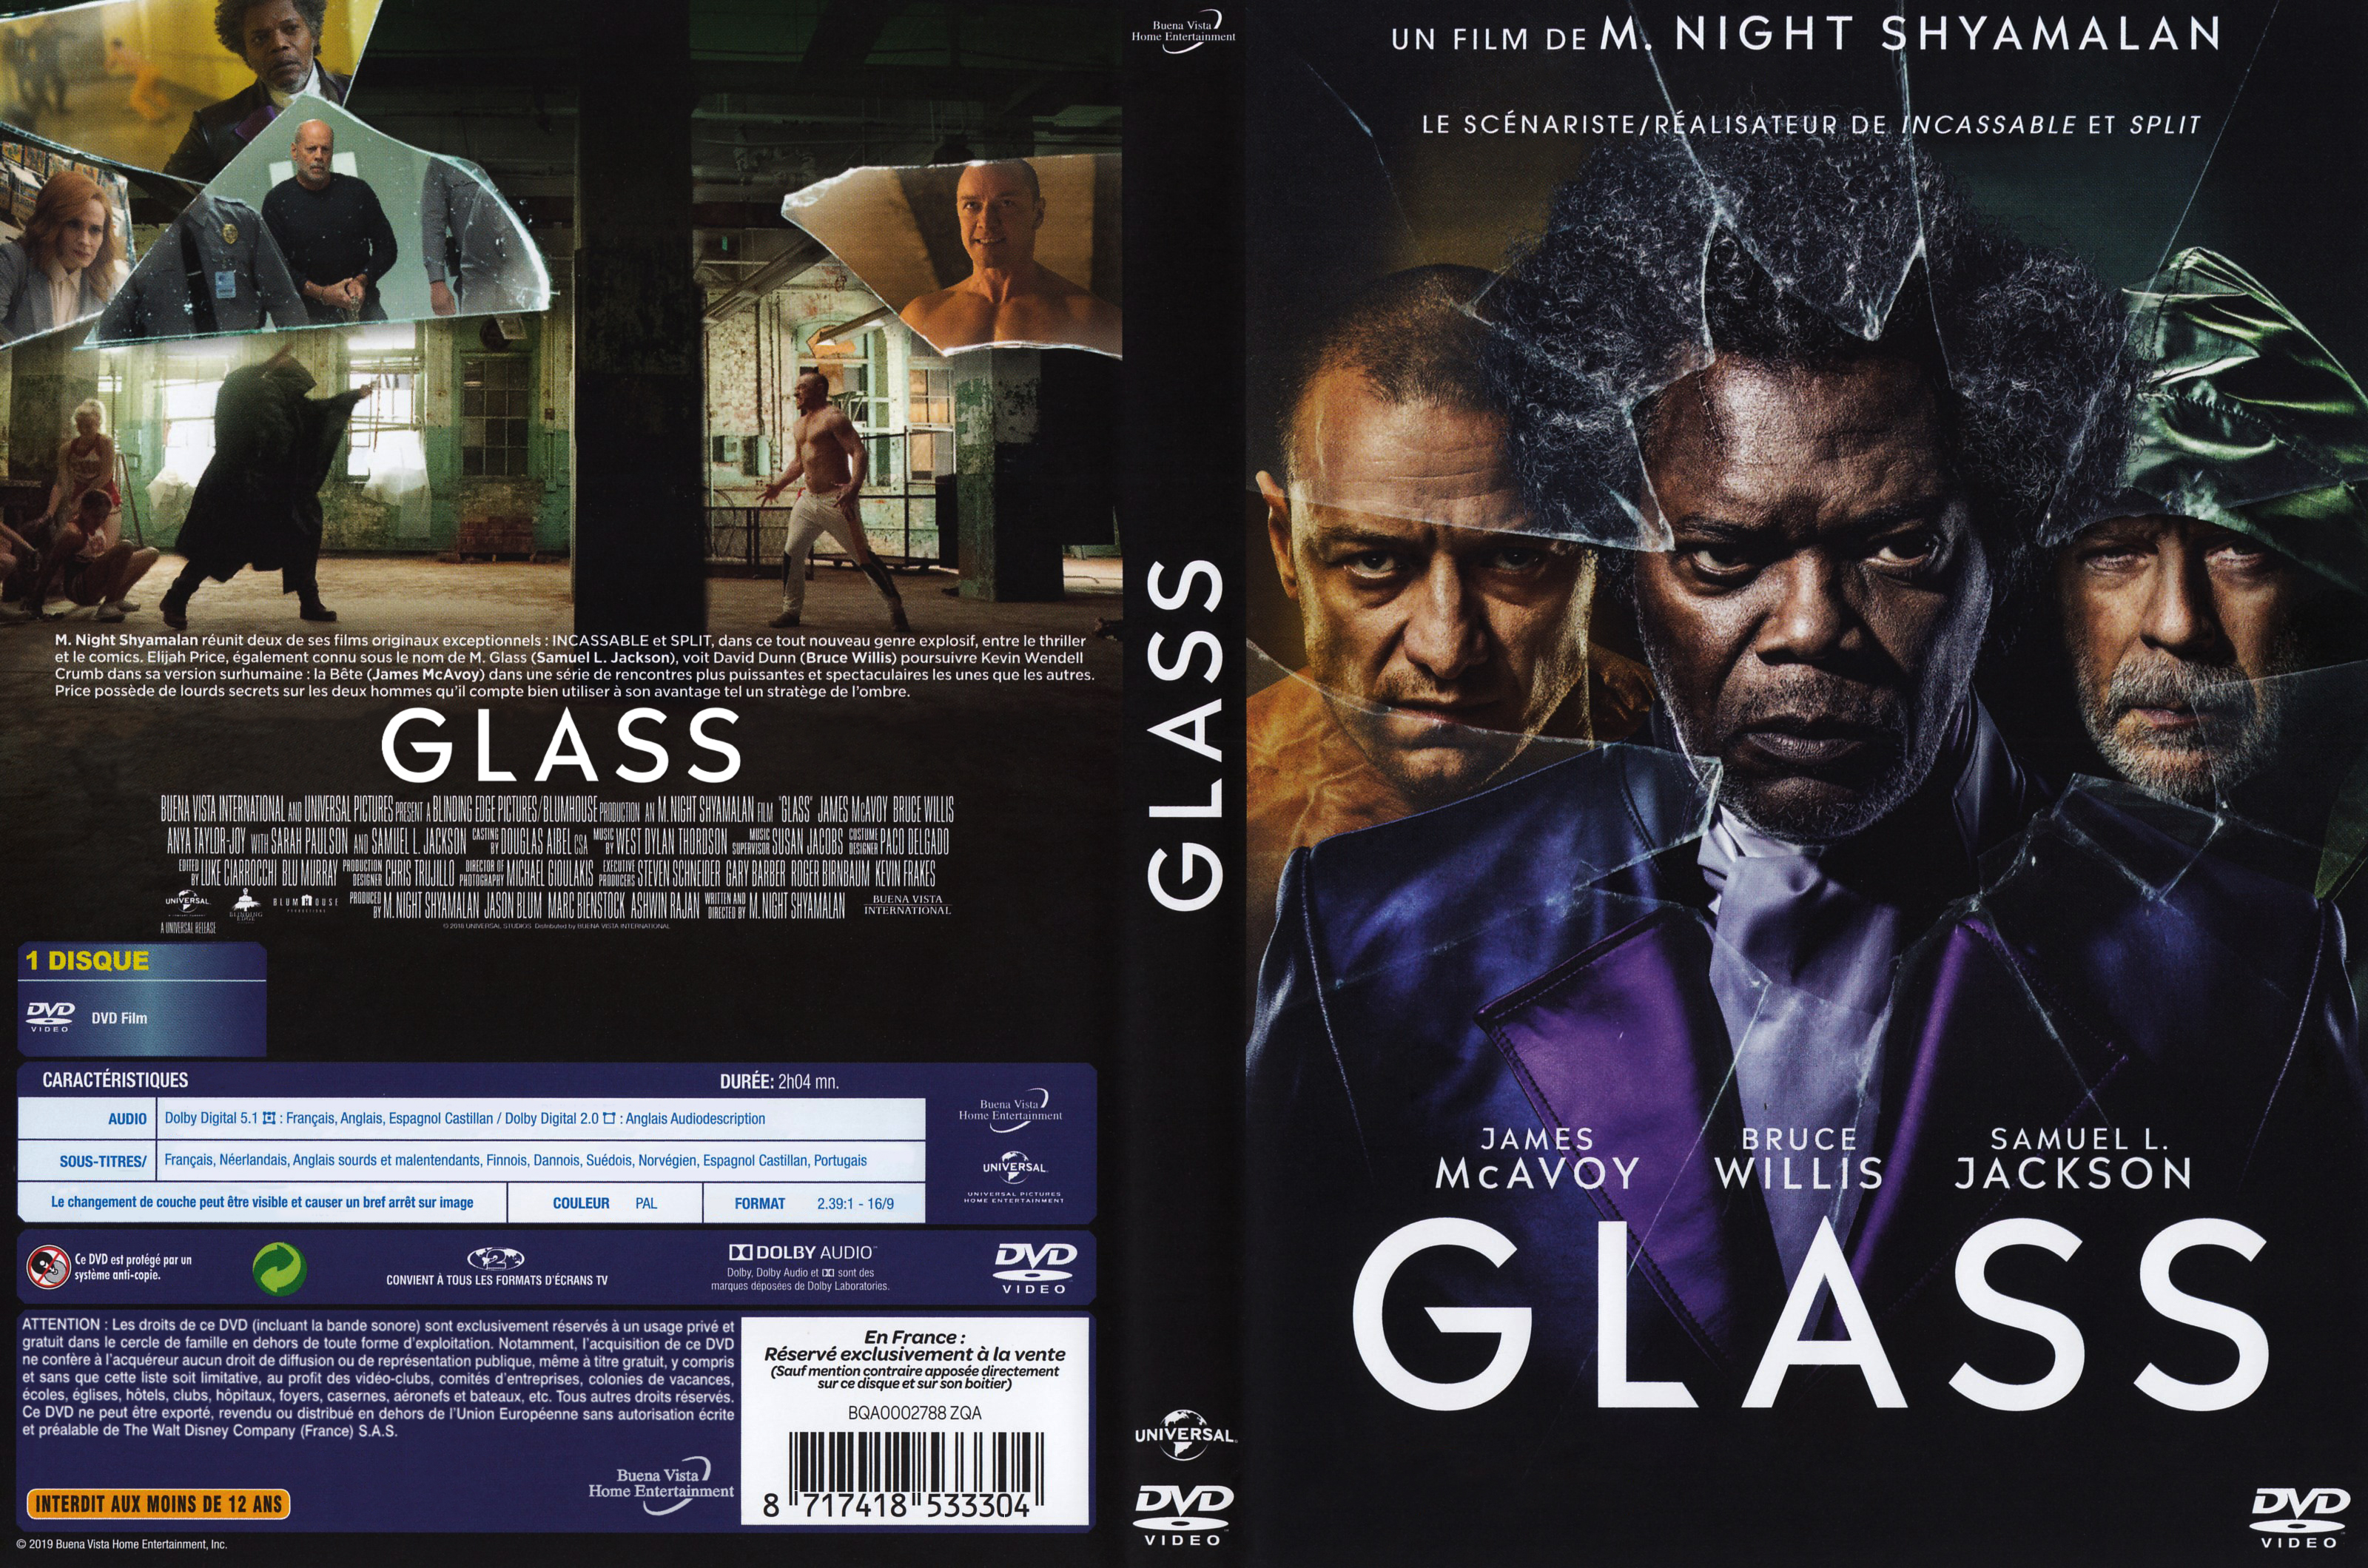 Jaquette DVD Glass custom